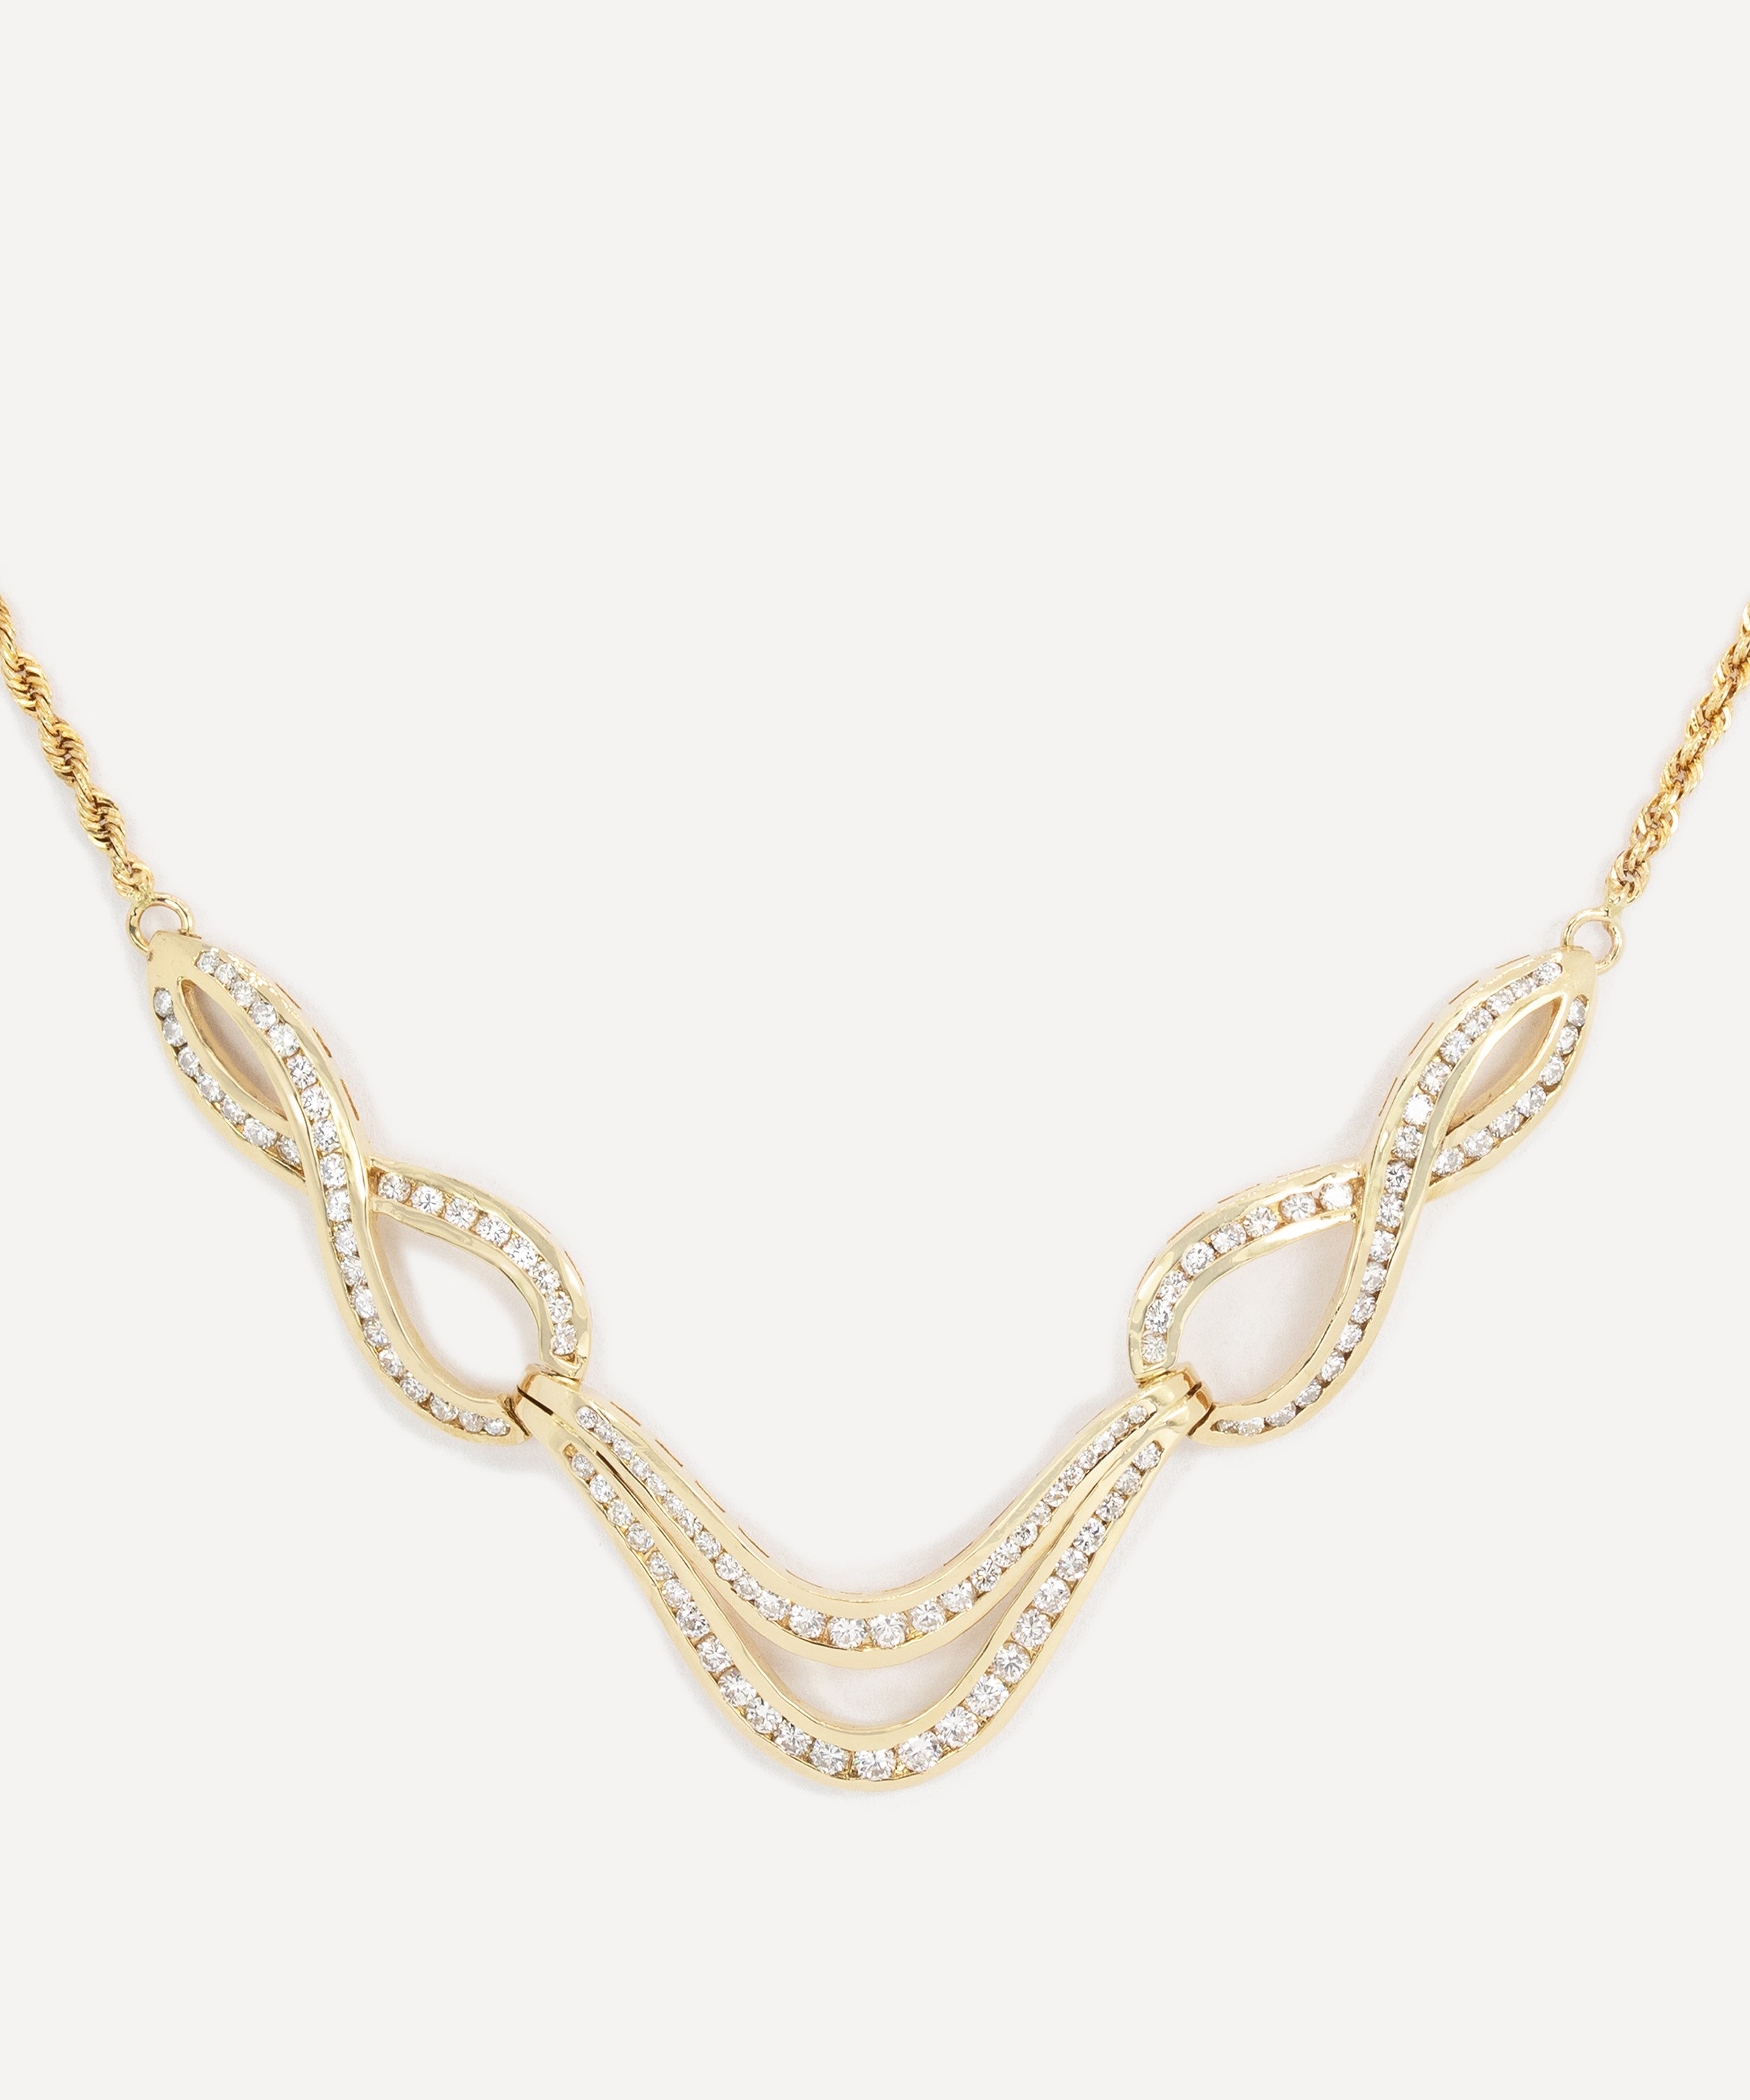 Kojis - 14ct Gold Vintage Diamond Twist Necklace